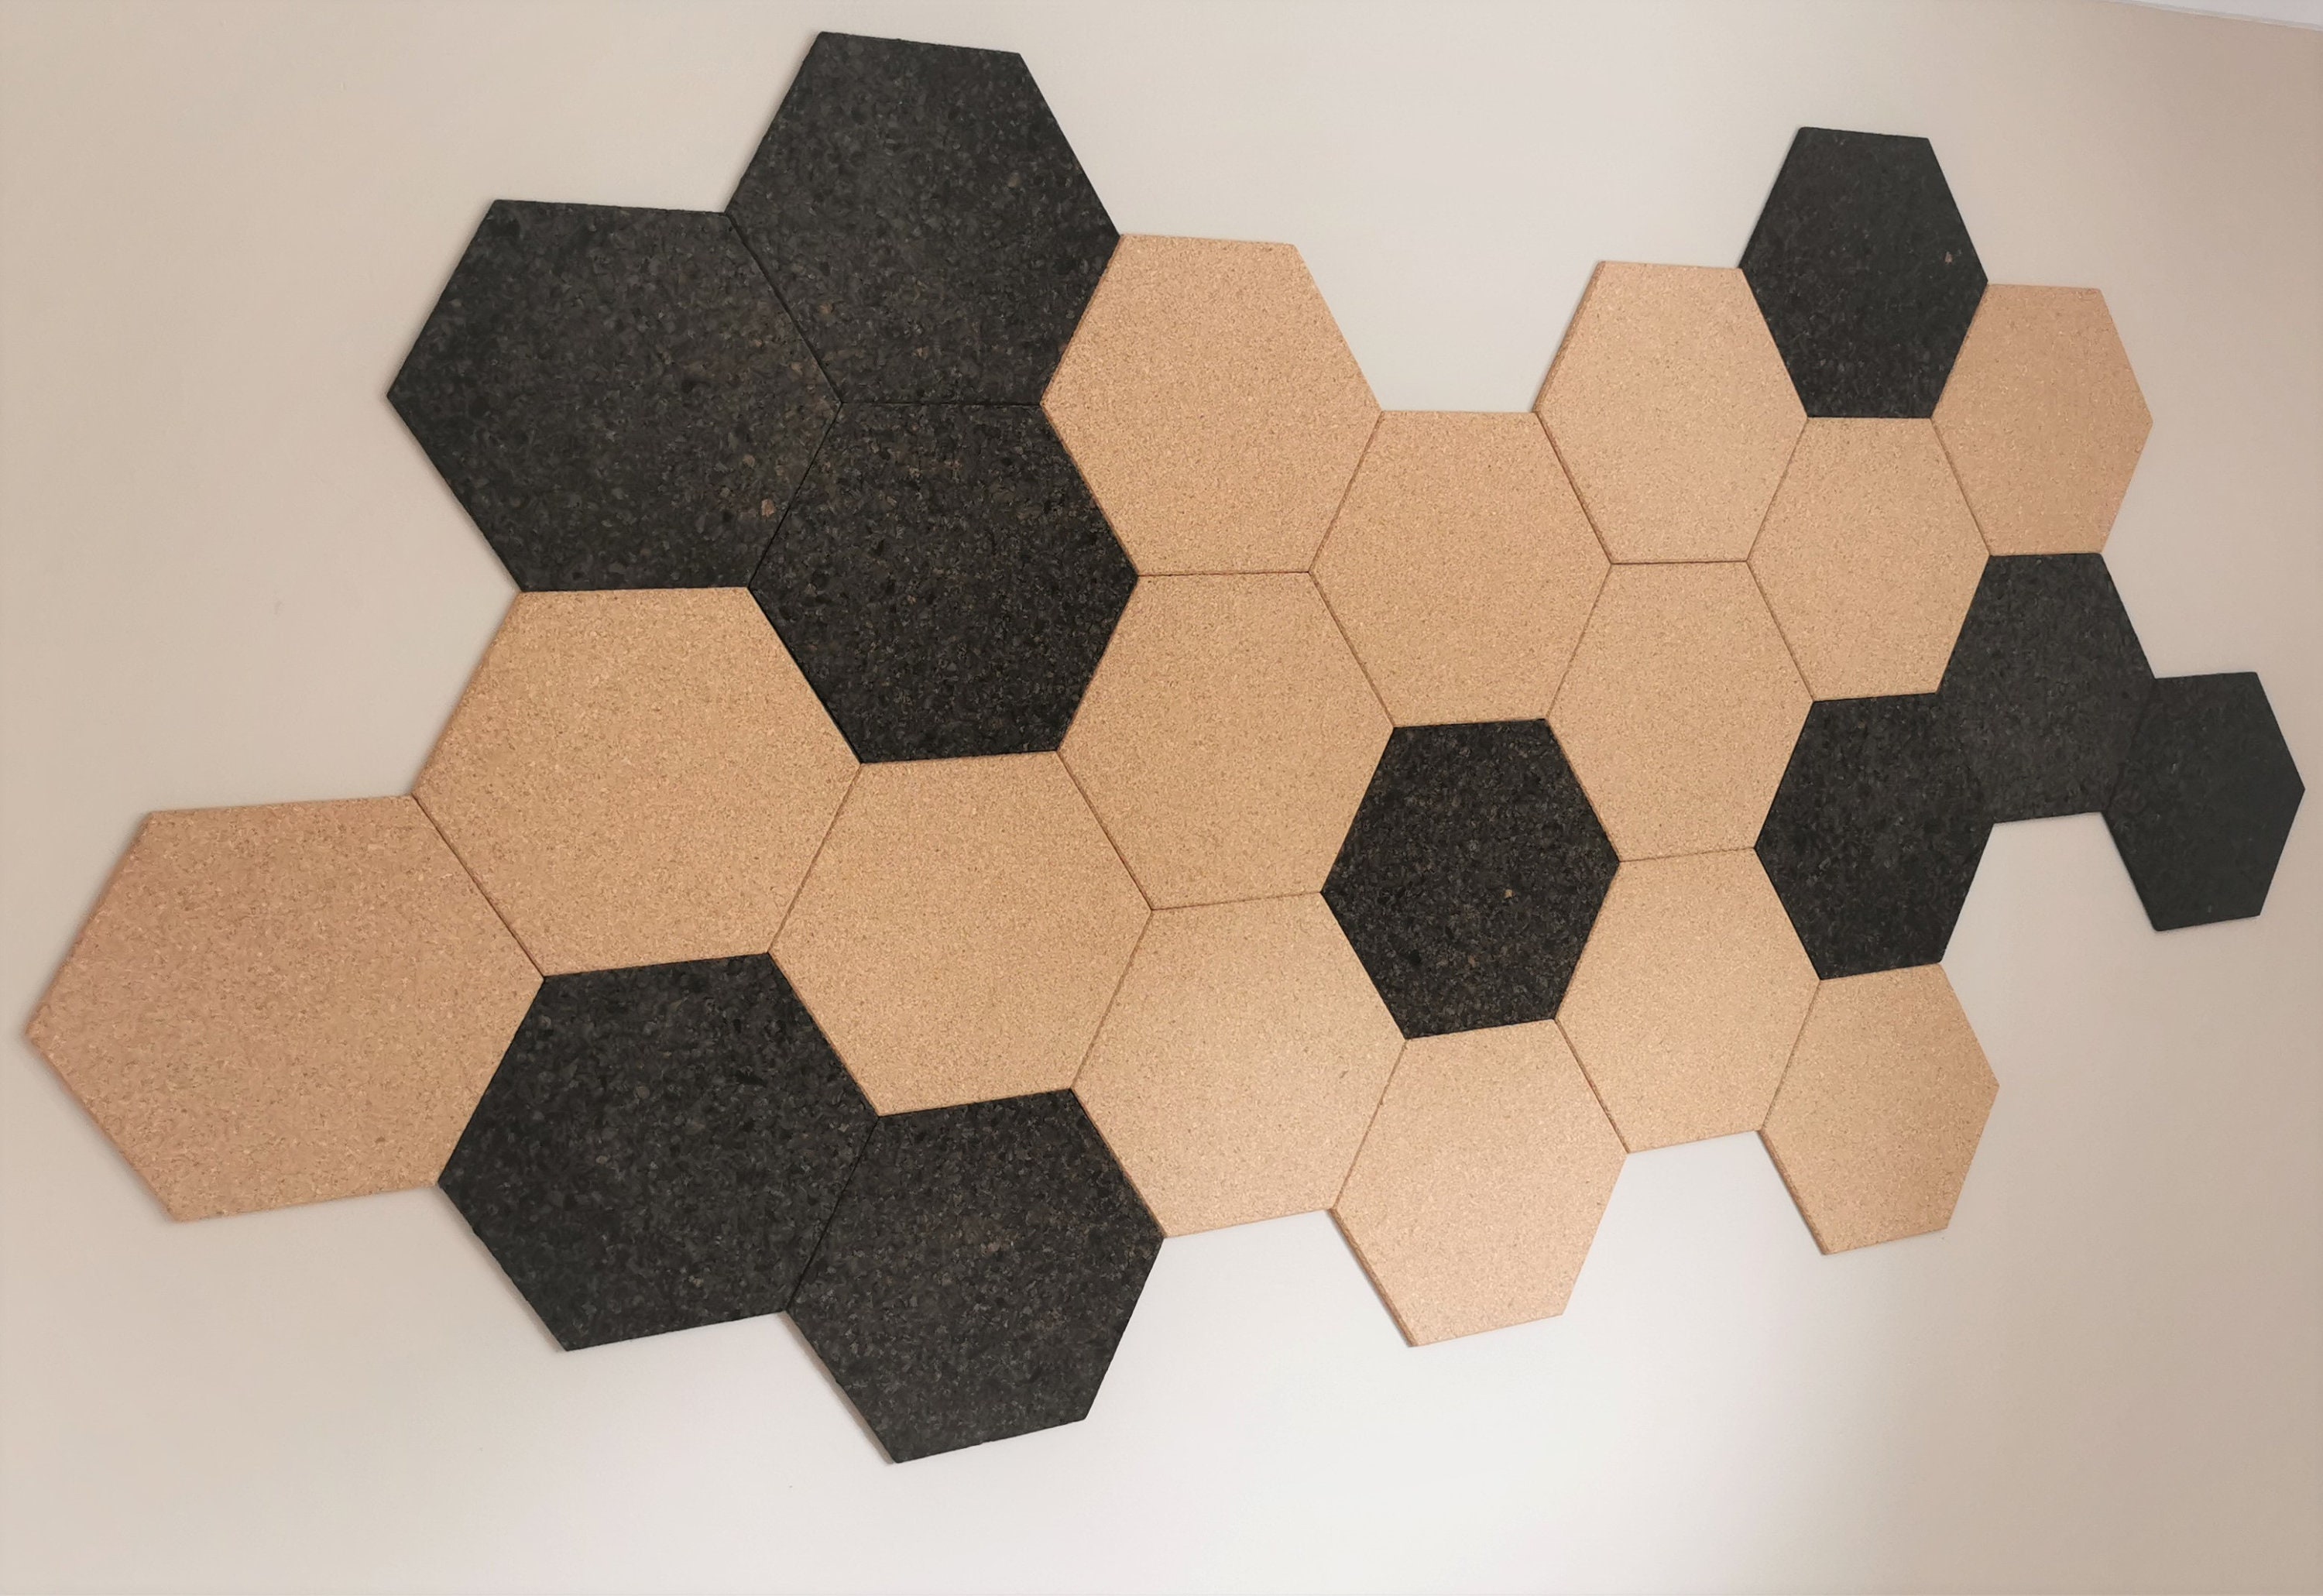 Decorative agglomerated self-adhesive hexagon DECORK CORK-line - Cork  designer DECORK wall tiles - Experts in cork products!